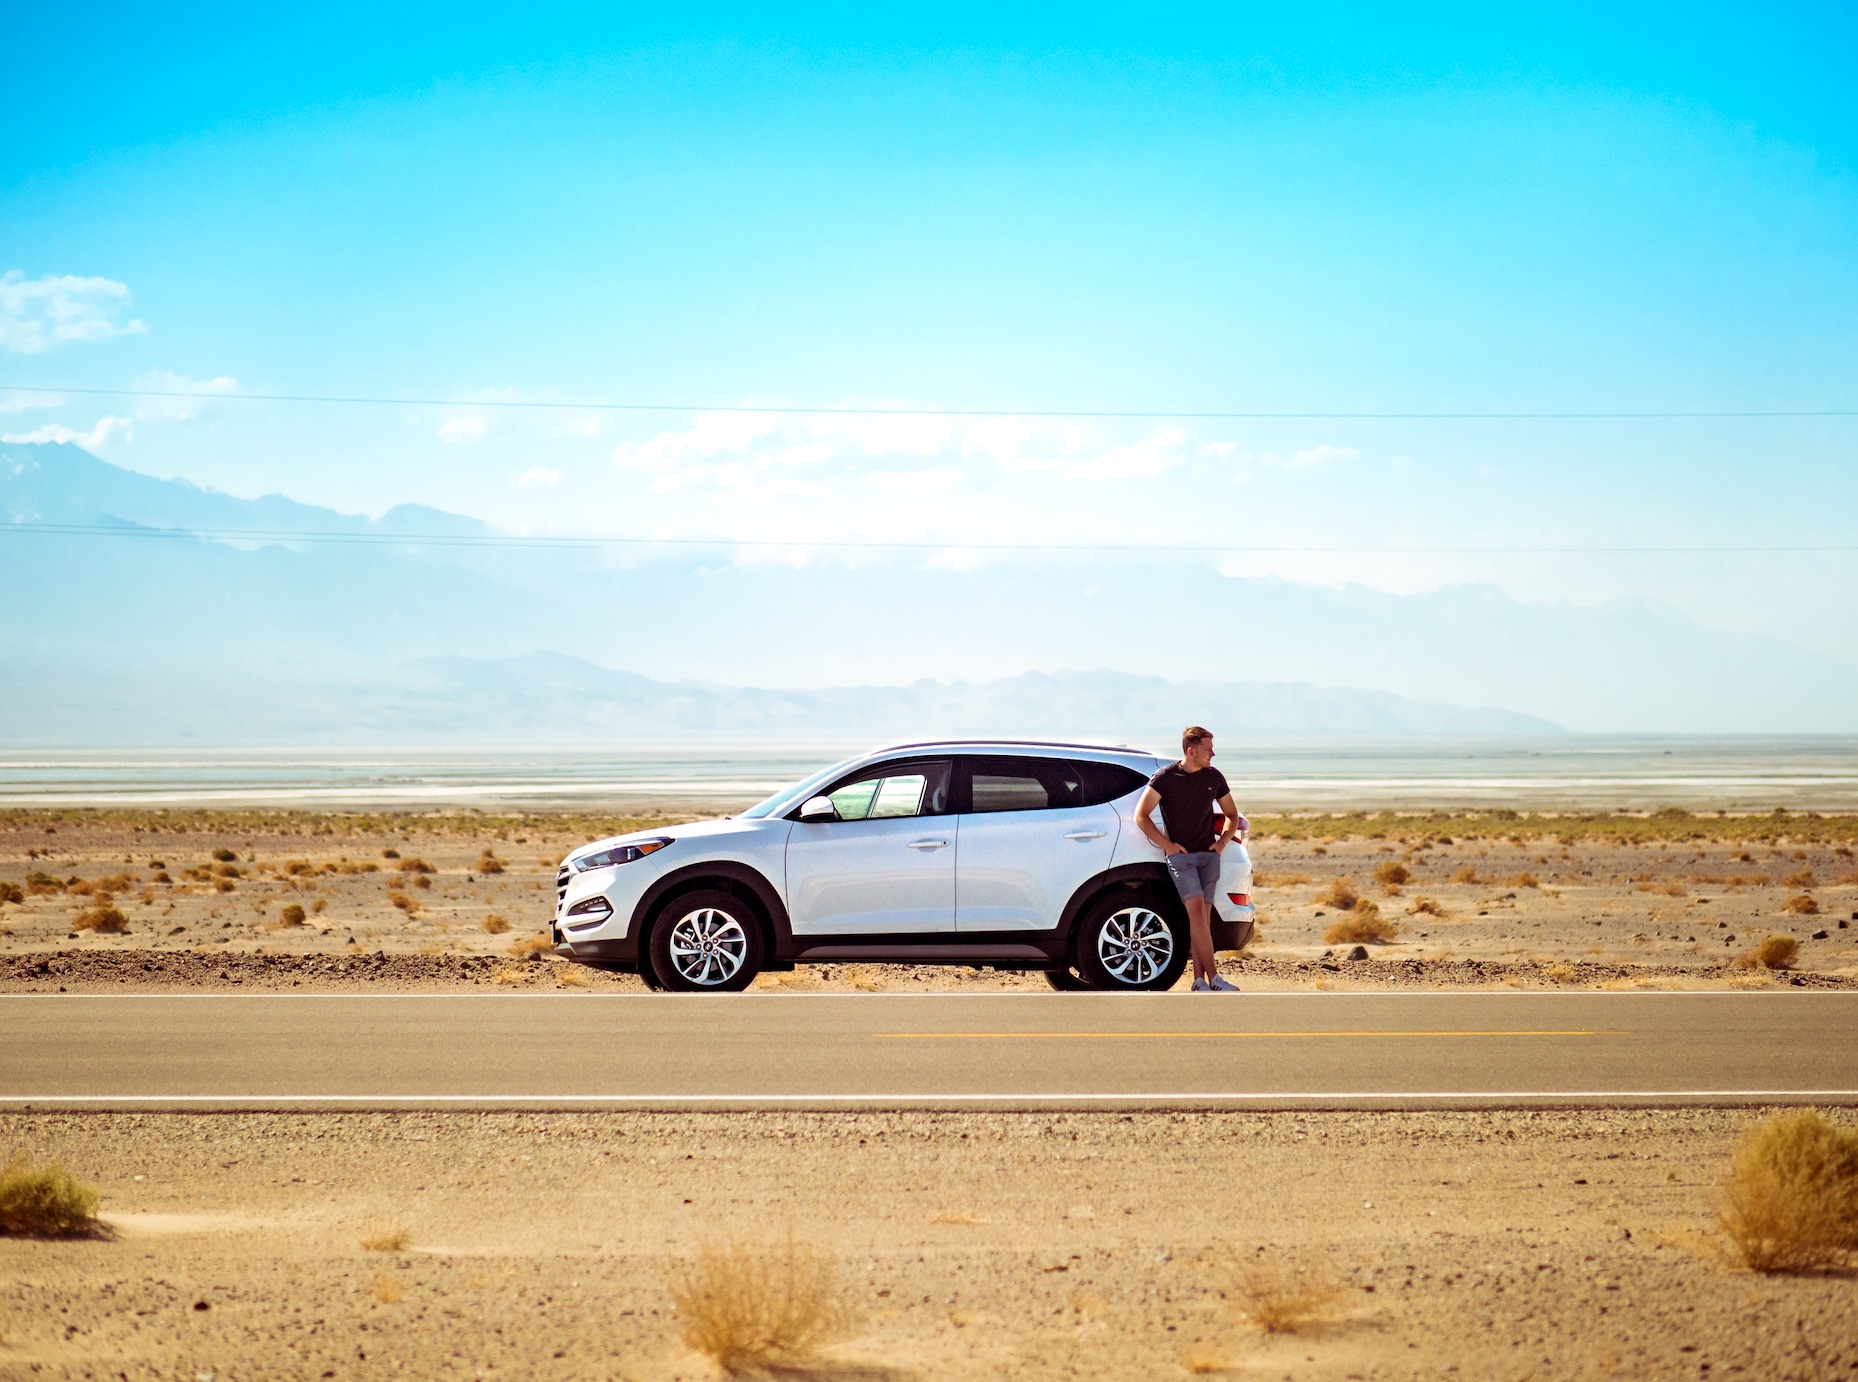 Man leaning against car on a desert road; image by Jamie Street, via Unsplash.com.